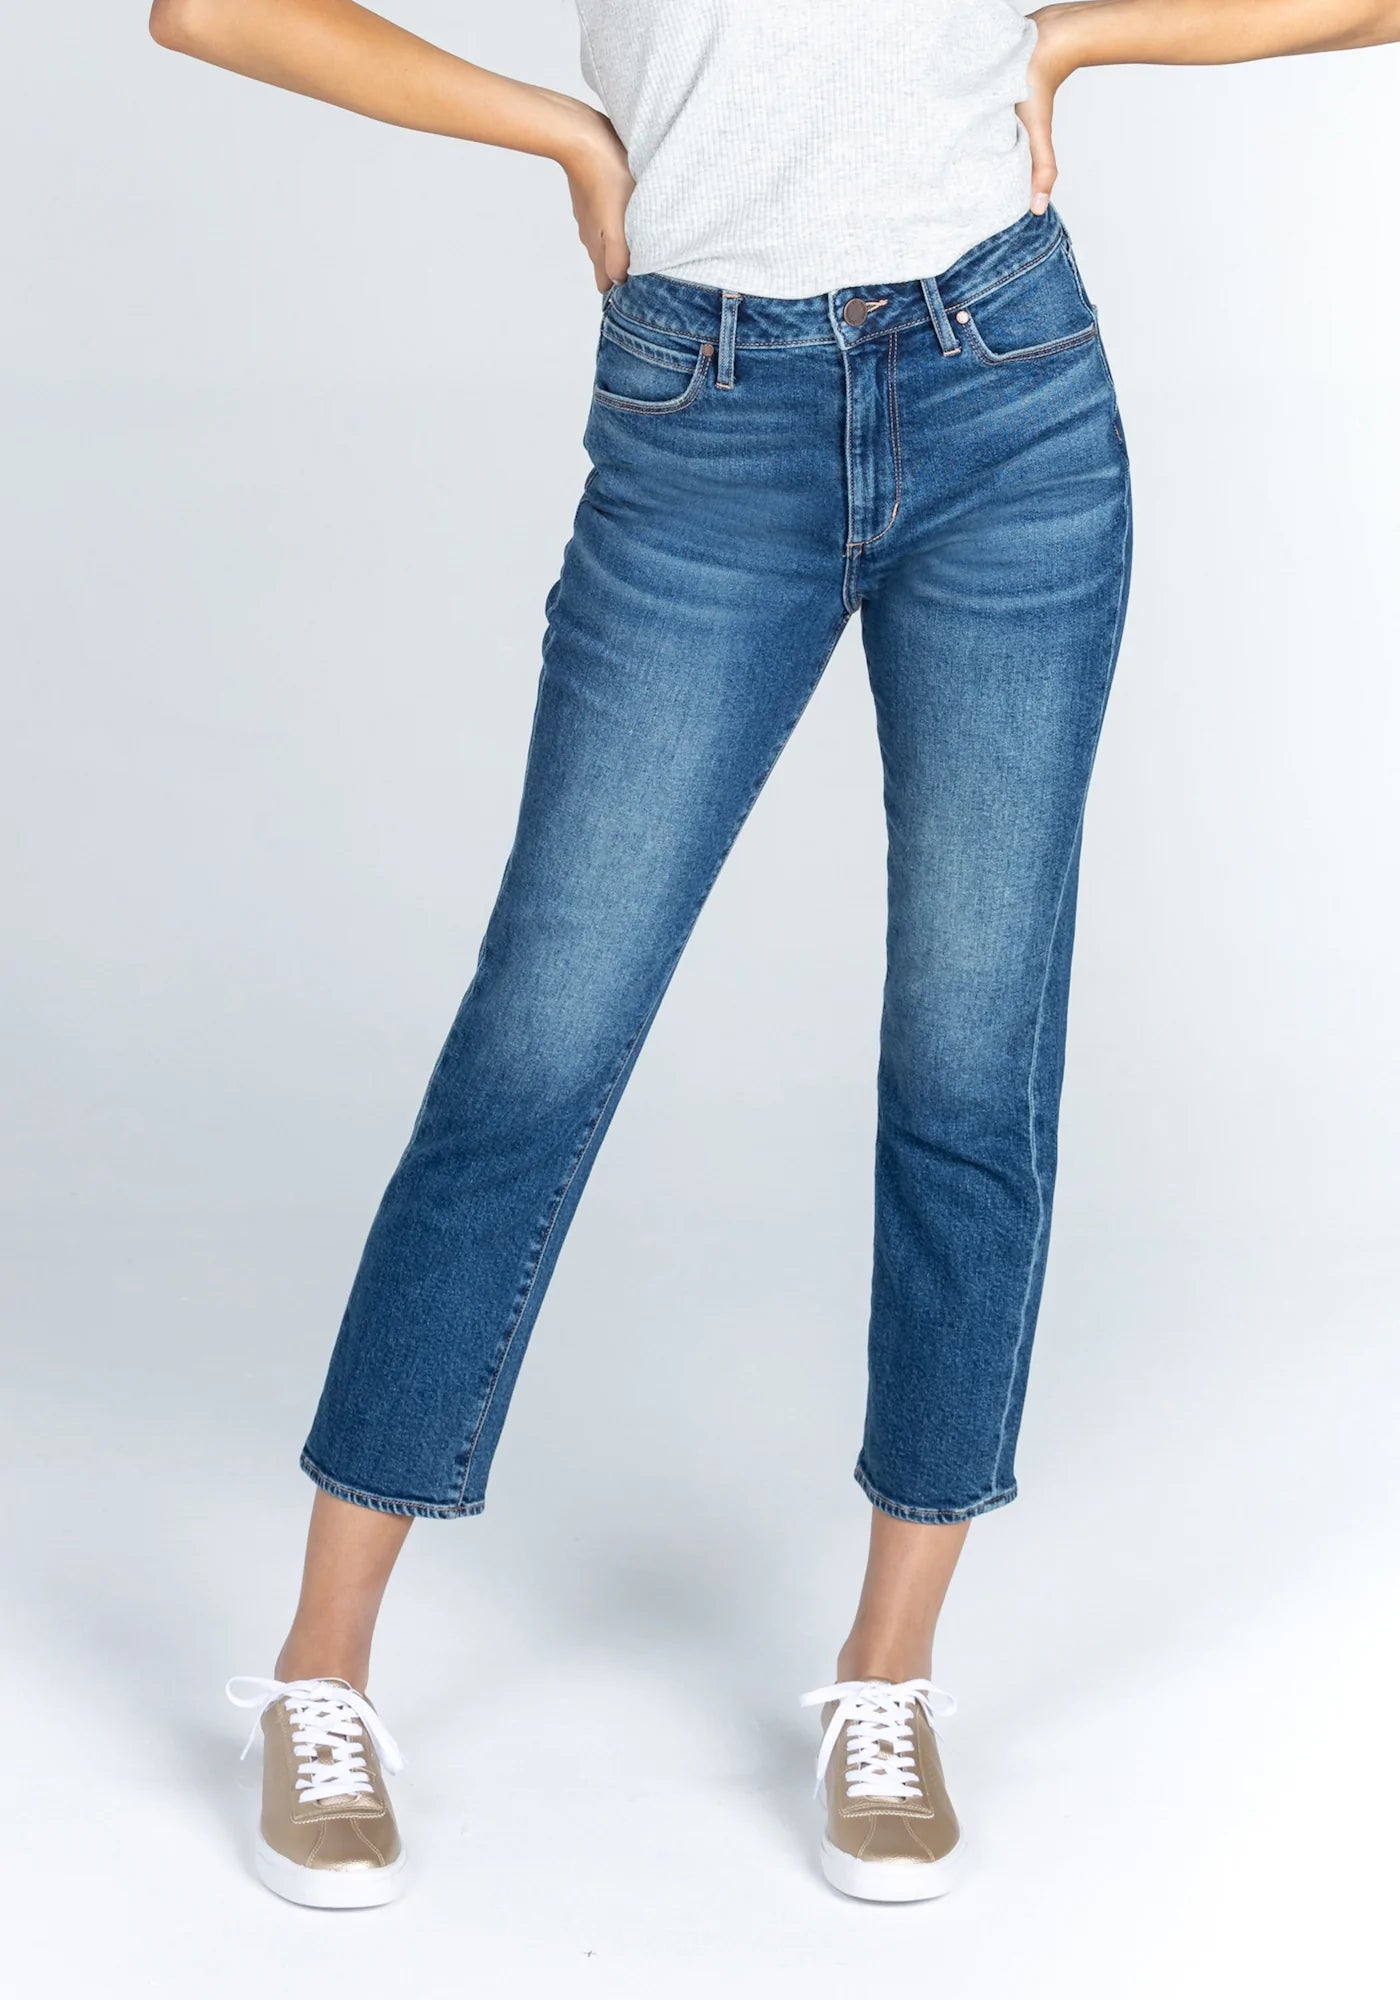 Articles of Society "Kate-Ewa Beach" Jeans in Medium Wash Final Sale